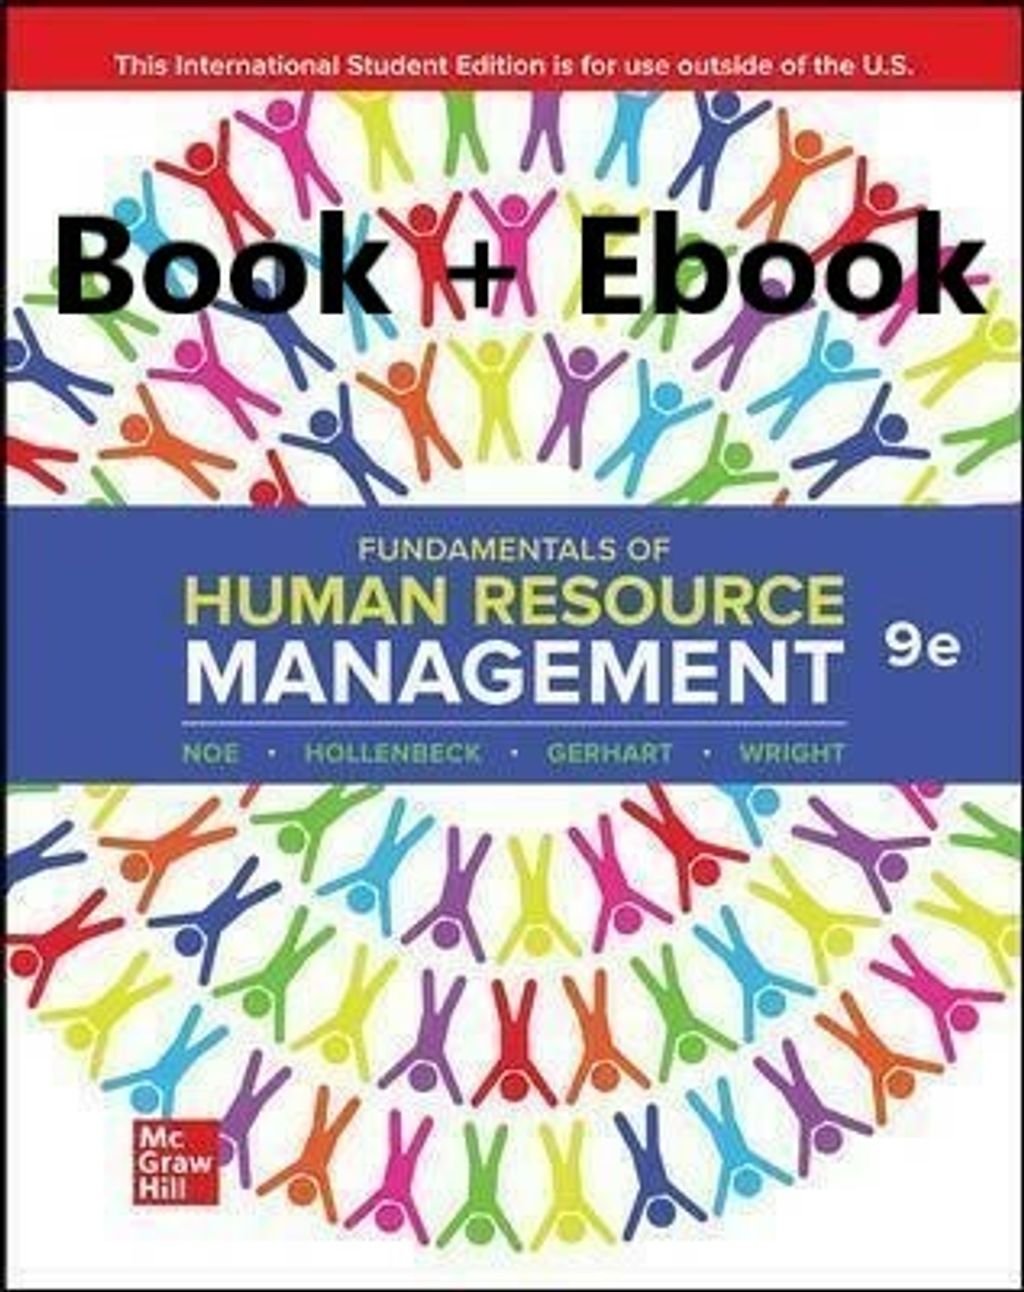 Book and Ebook Fundamentals of Human Resource Management Raymond Noe 9E .jpg